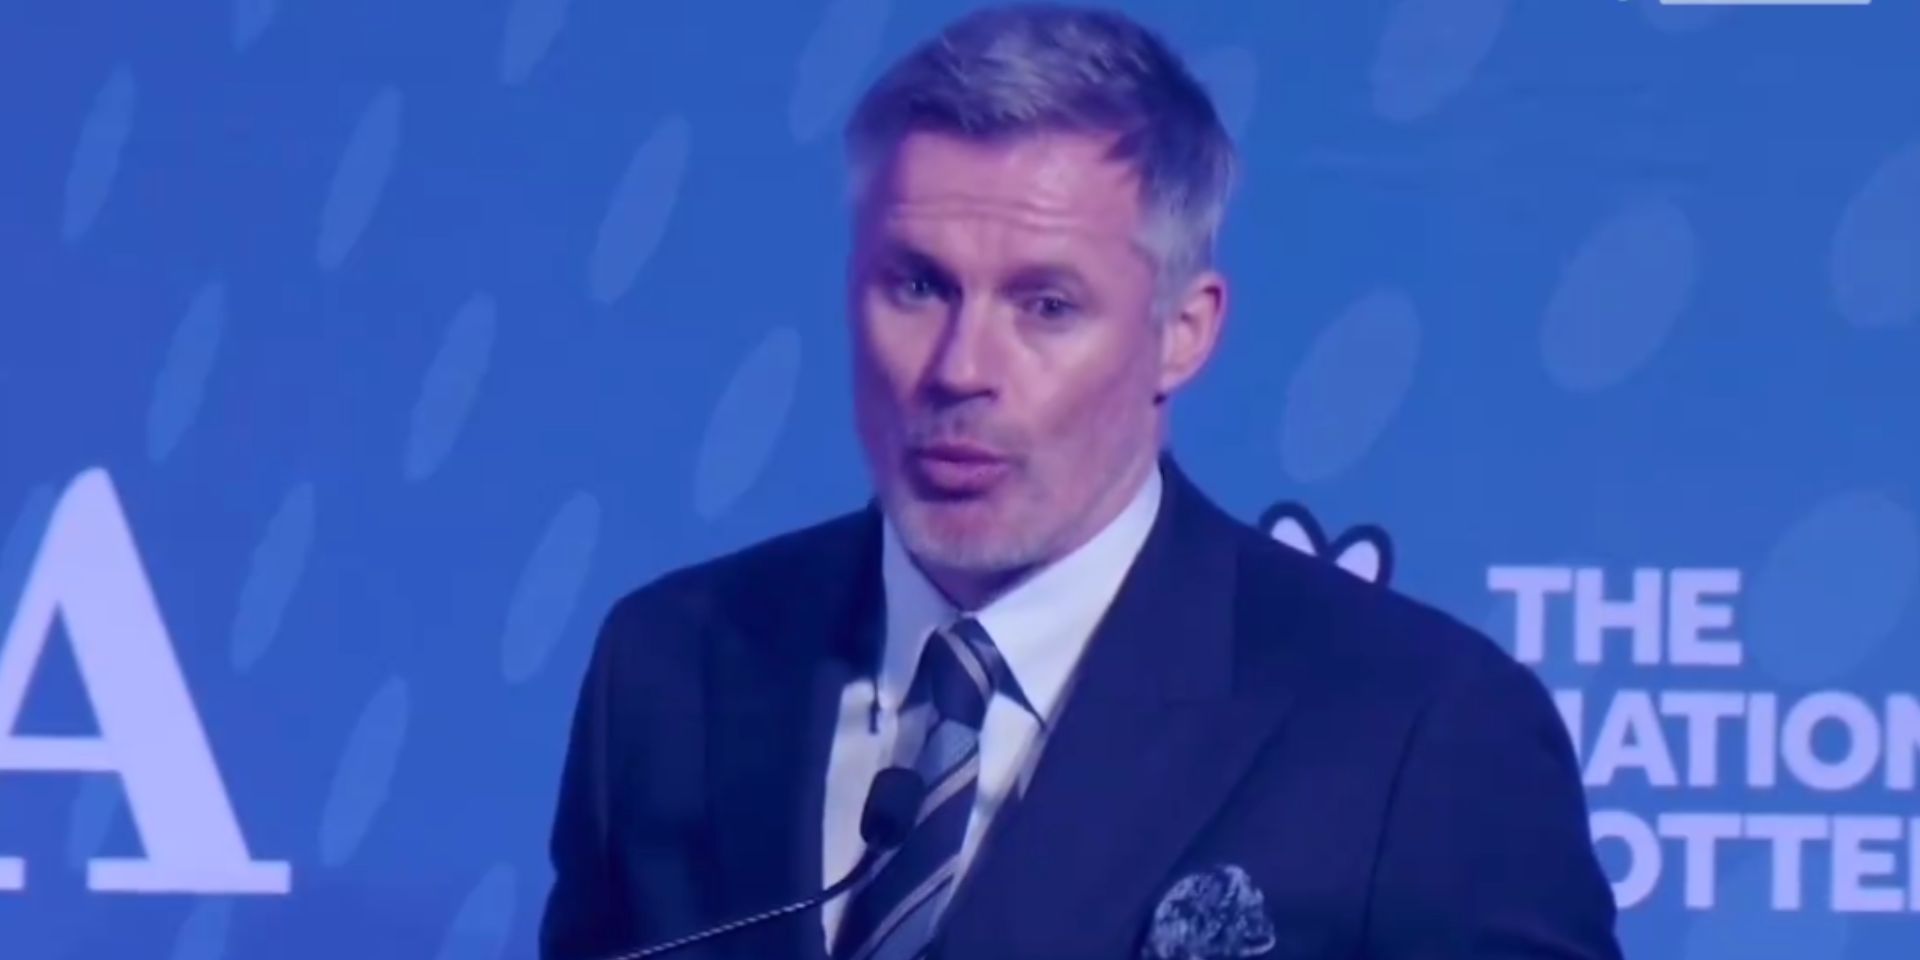 (Video) Carragher delivers brutal Neville put-down during award acceptance speech